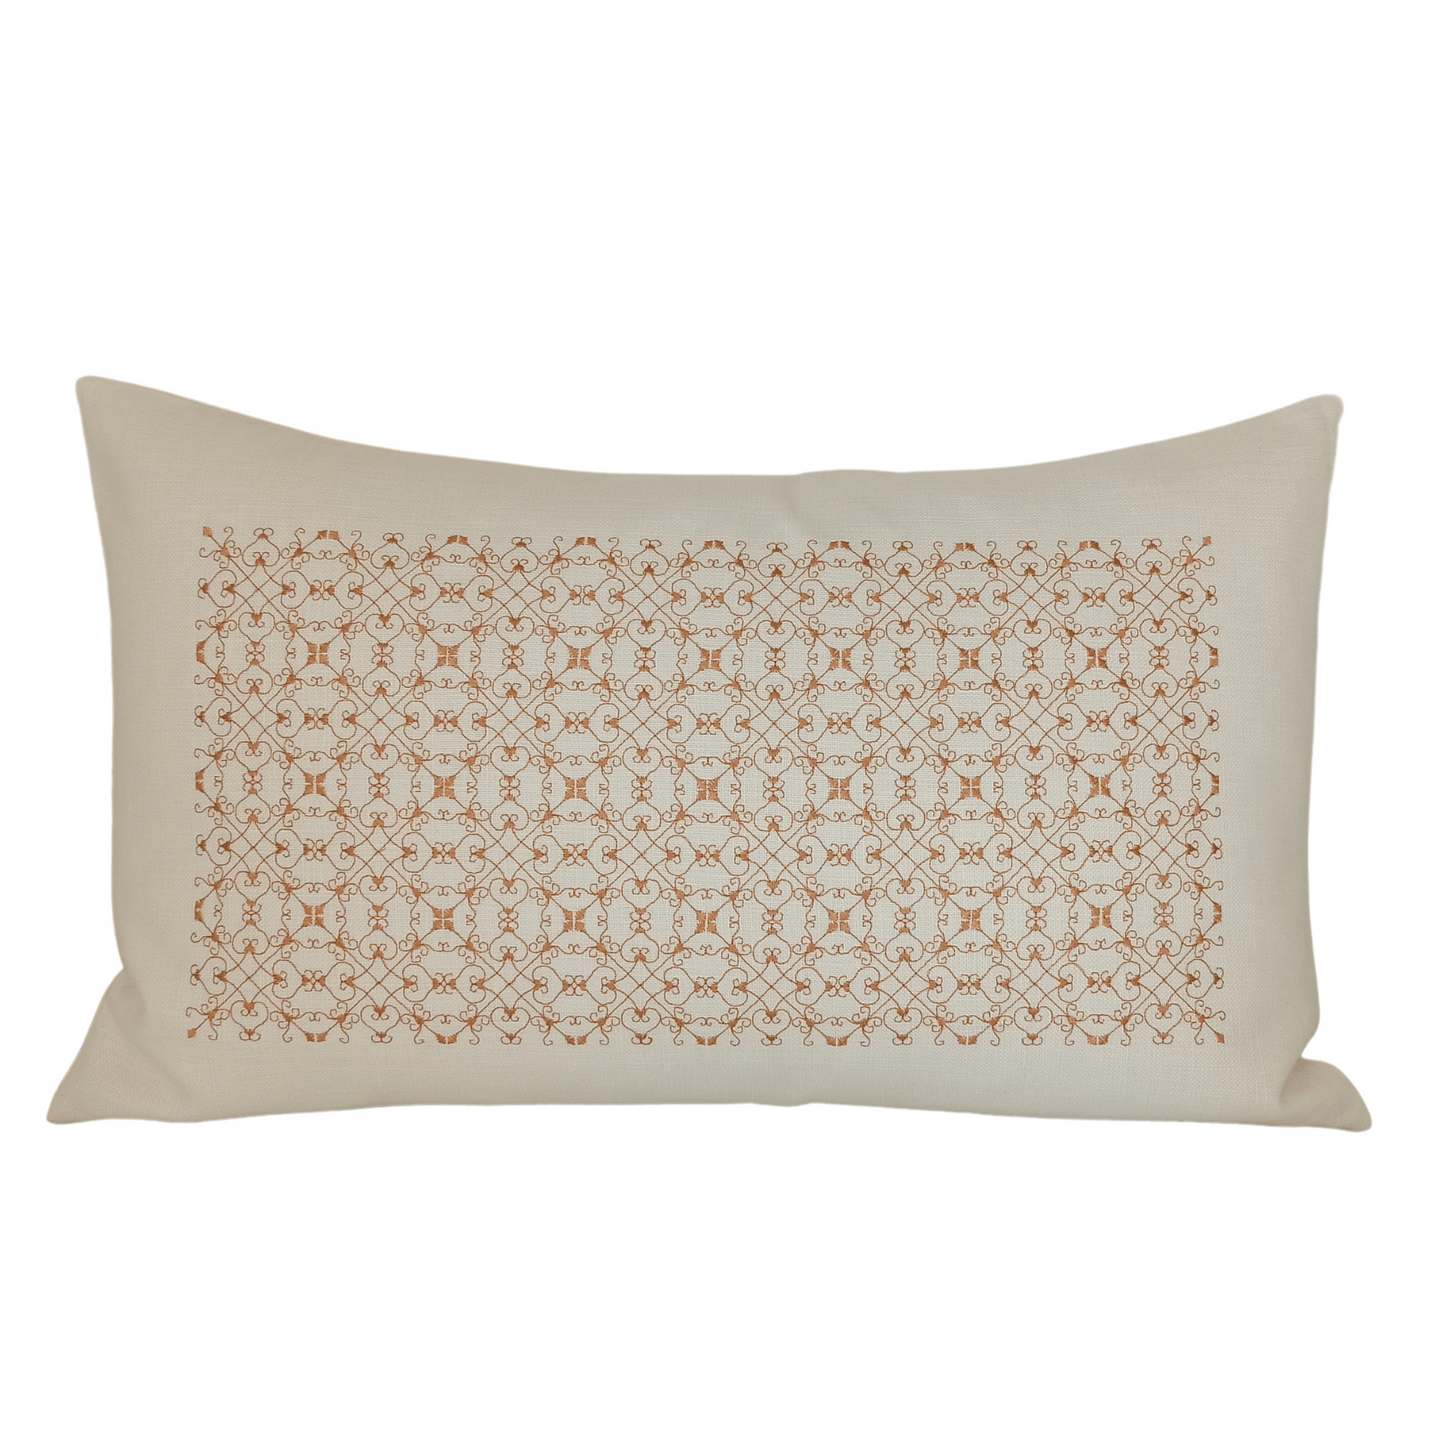 Linen Cushion Cover Portuguese Lace Rectangular - Caramel - Front Image